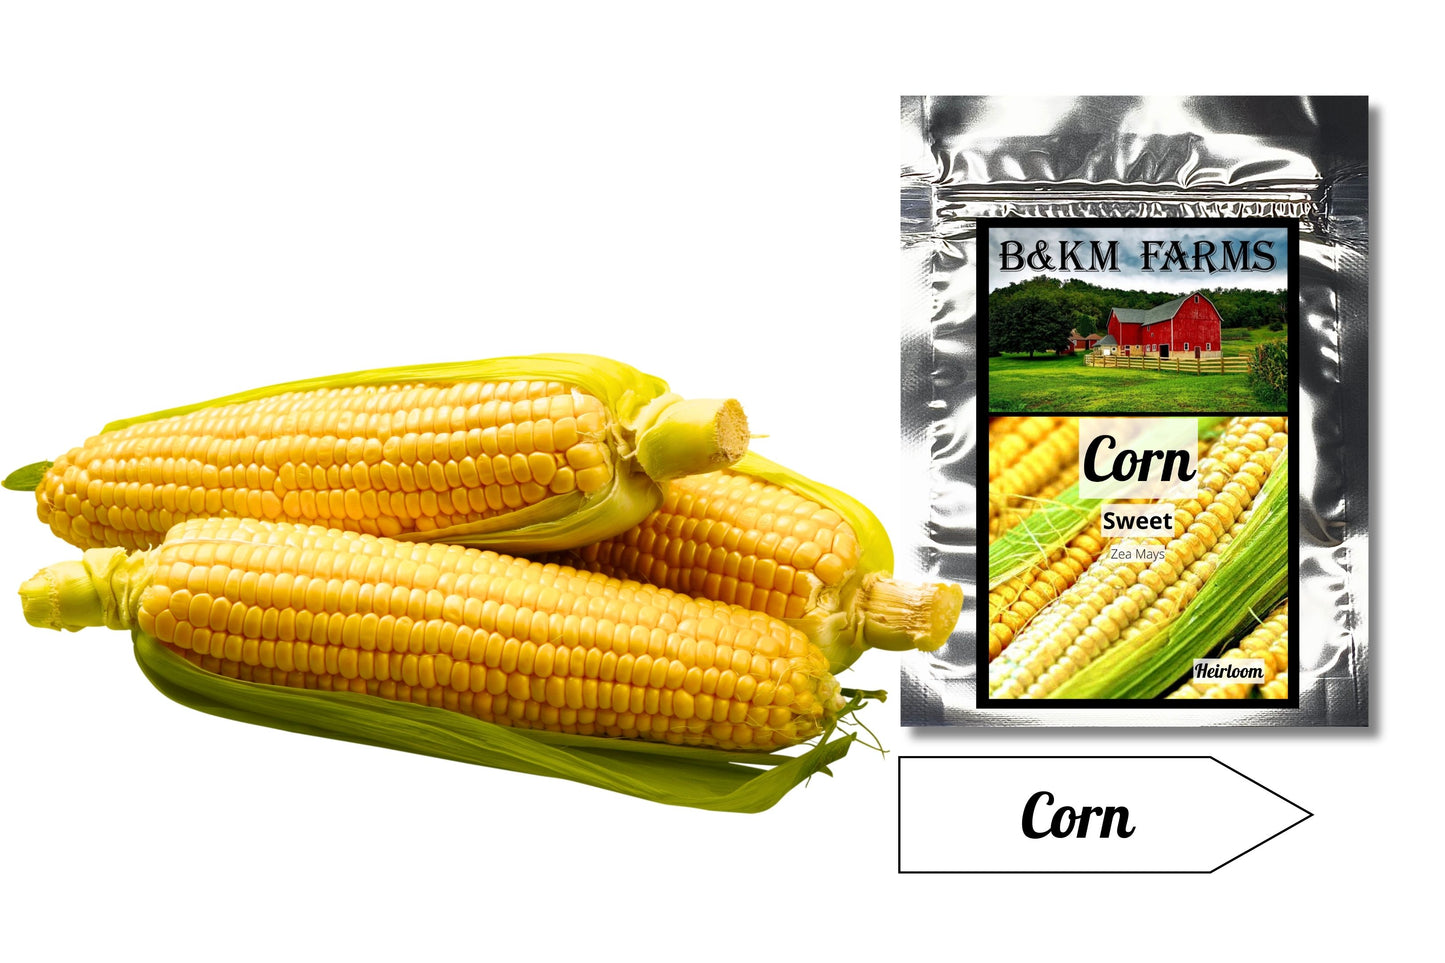 Golden Bantam: The Classic Corn, Reimagined